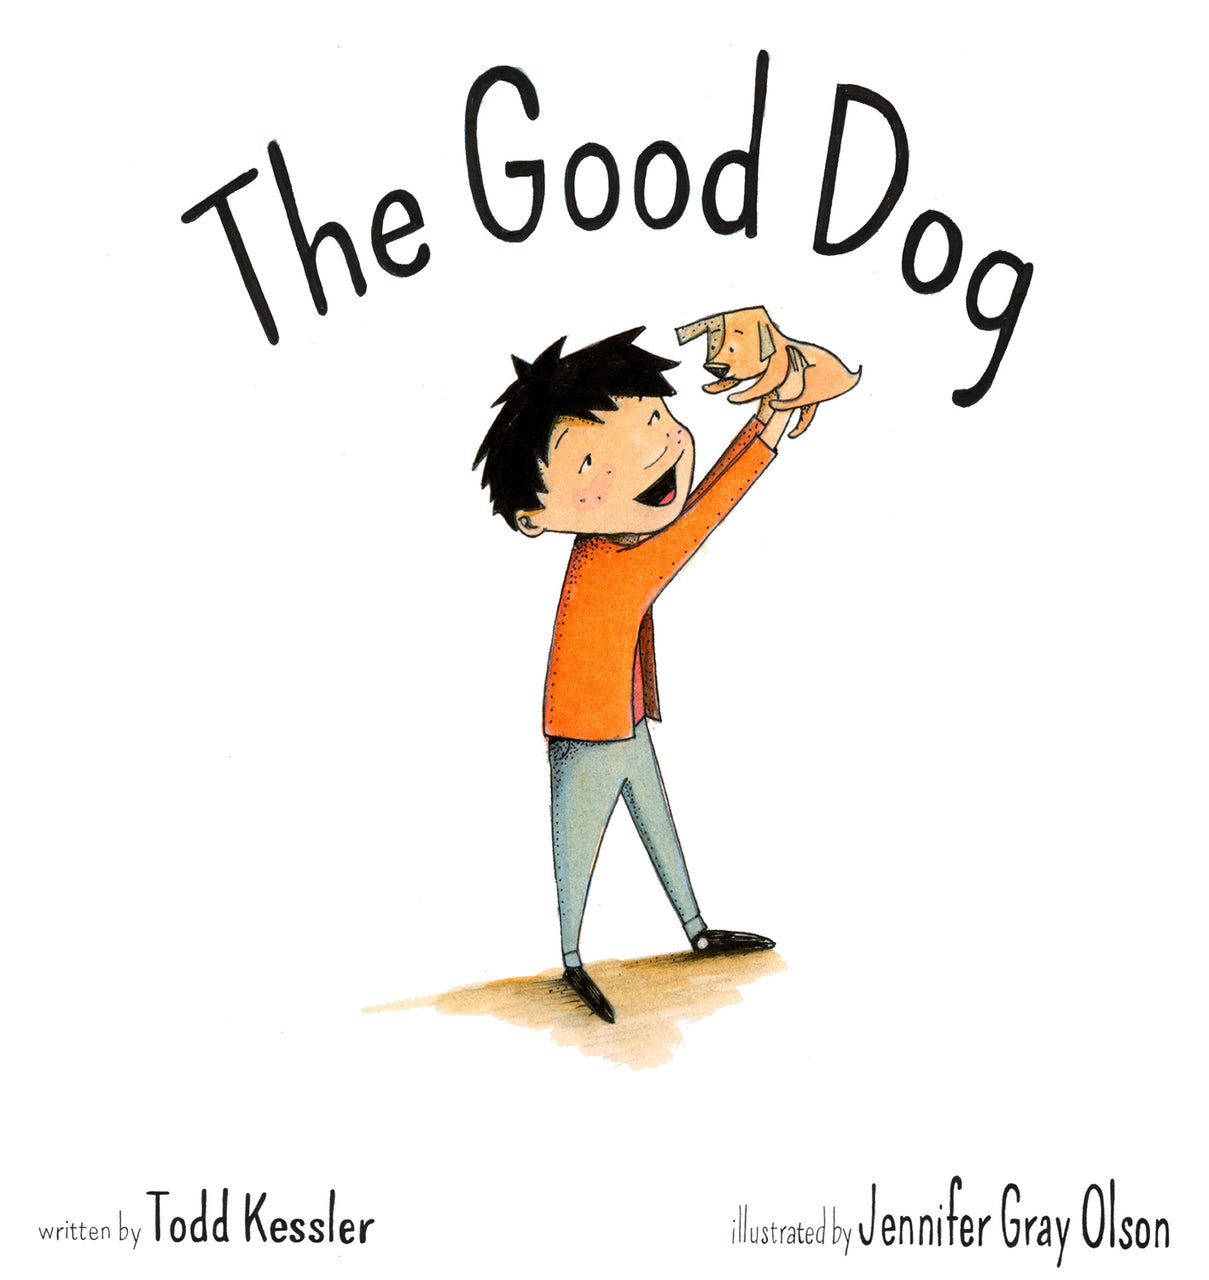 The Good Dog